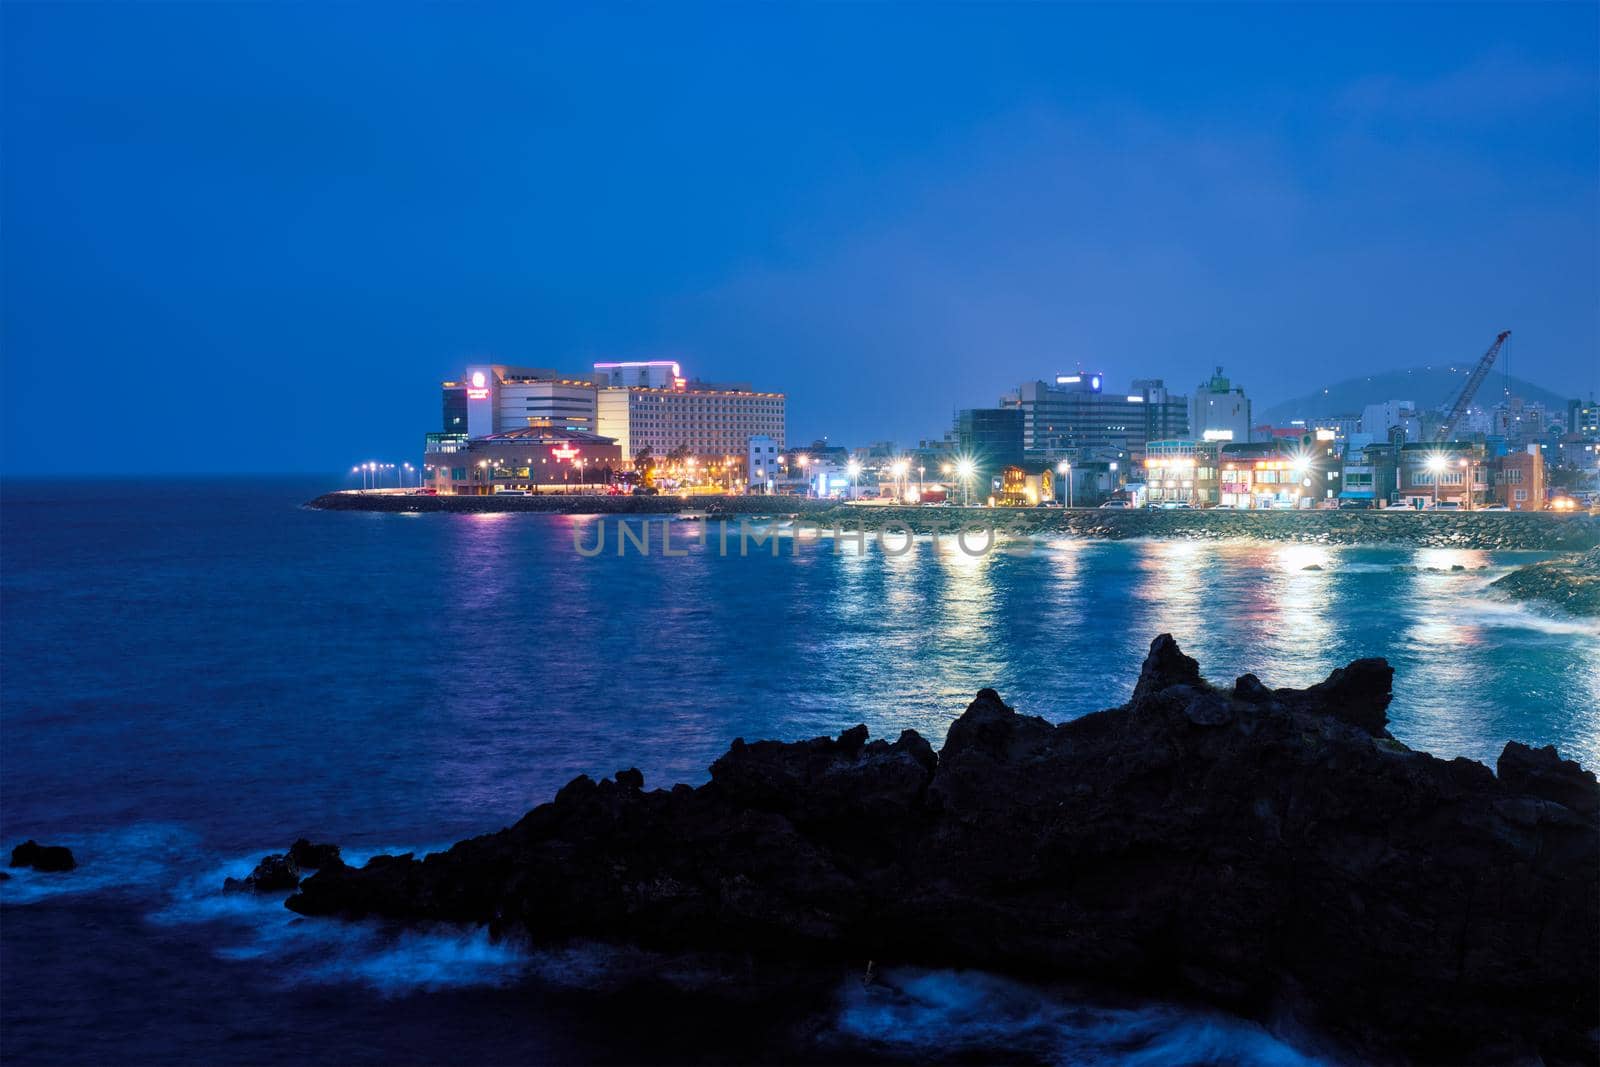 Jeju town illuminated in night, Jeju island, South Korea by dimol